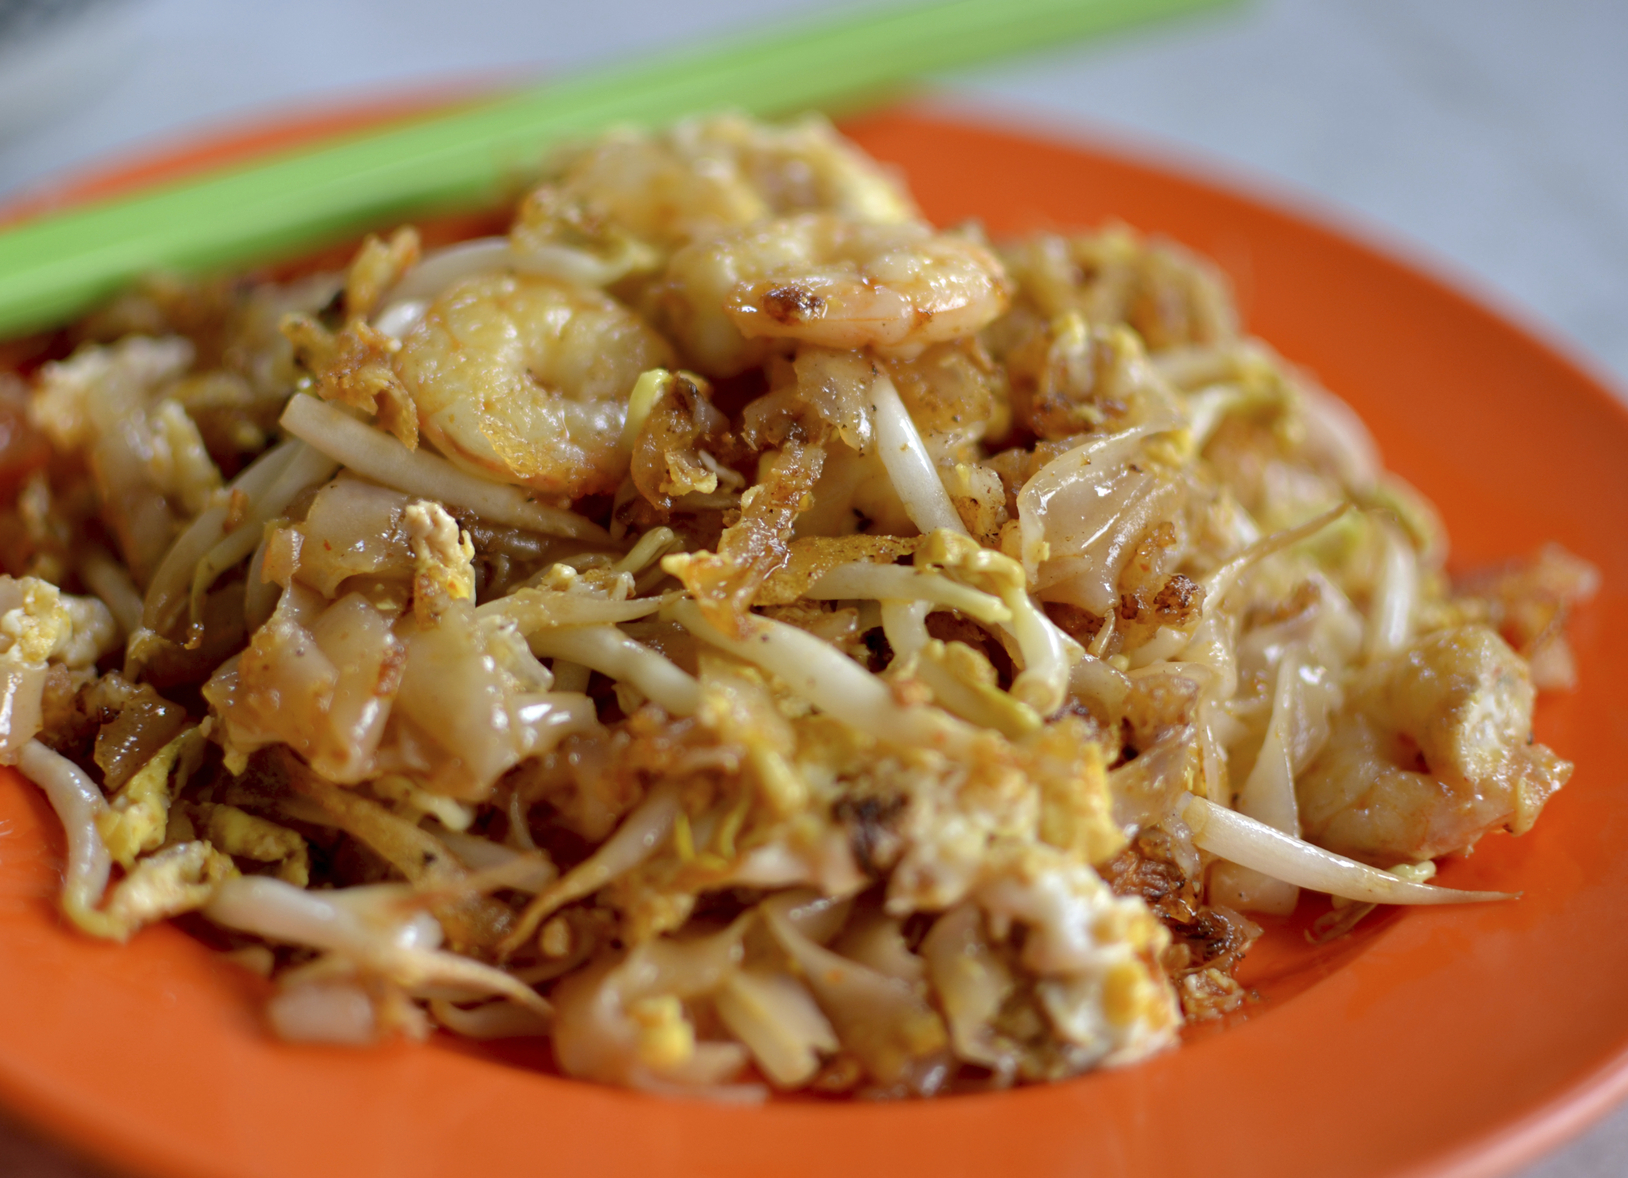 Penang Street Food - Suma - Explore Asia